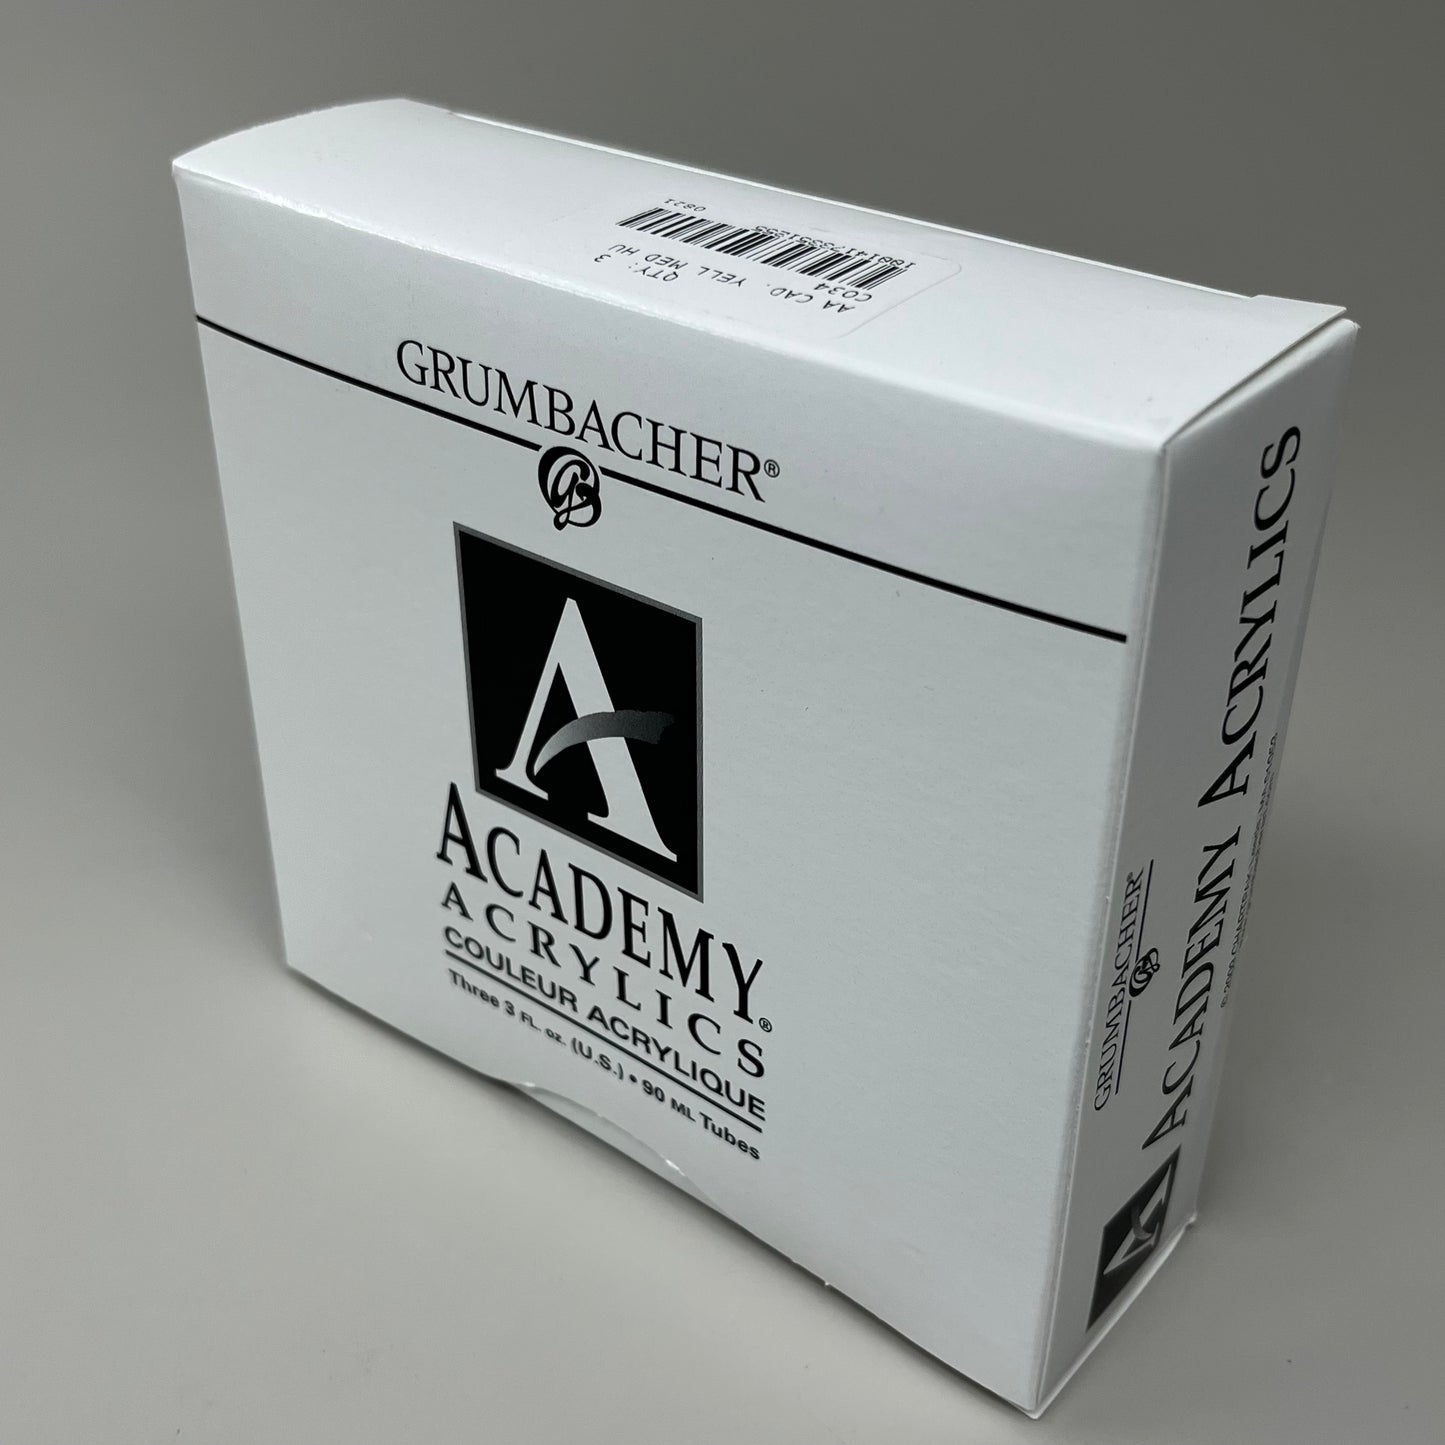 GRUMBACHER 3-PACK! Acrylic Paint Cadmium Yellow 3 fl oz / 90 ml C034 (New)